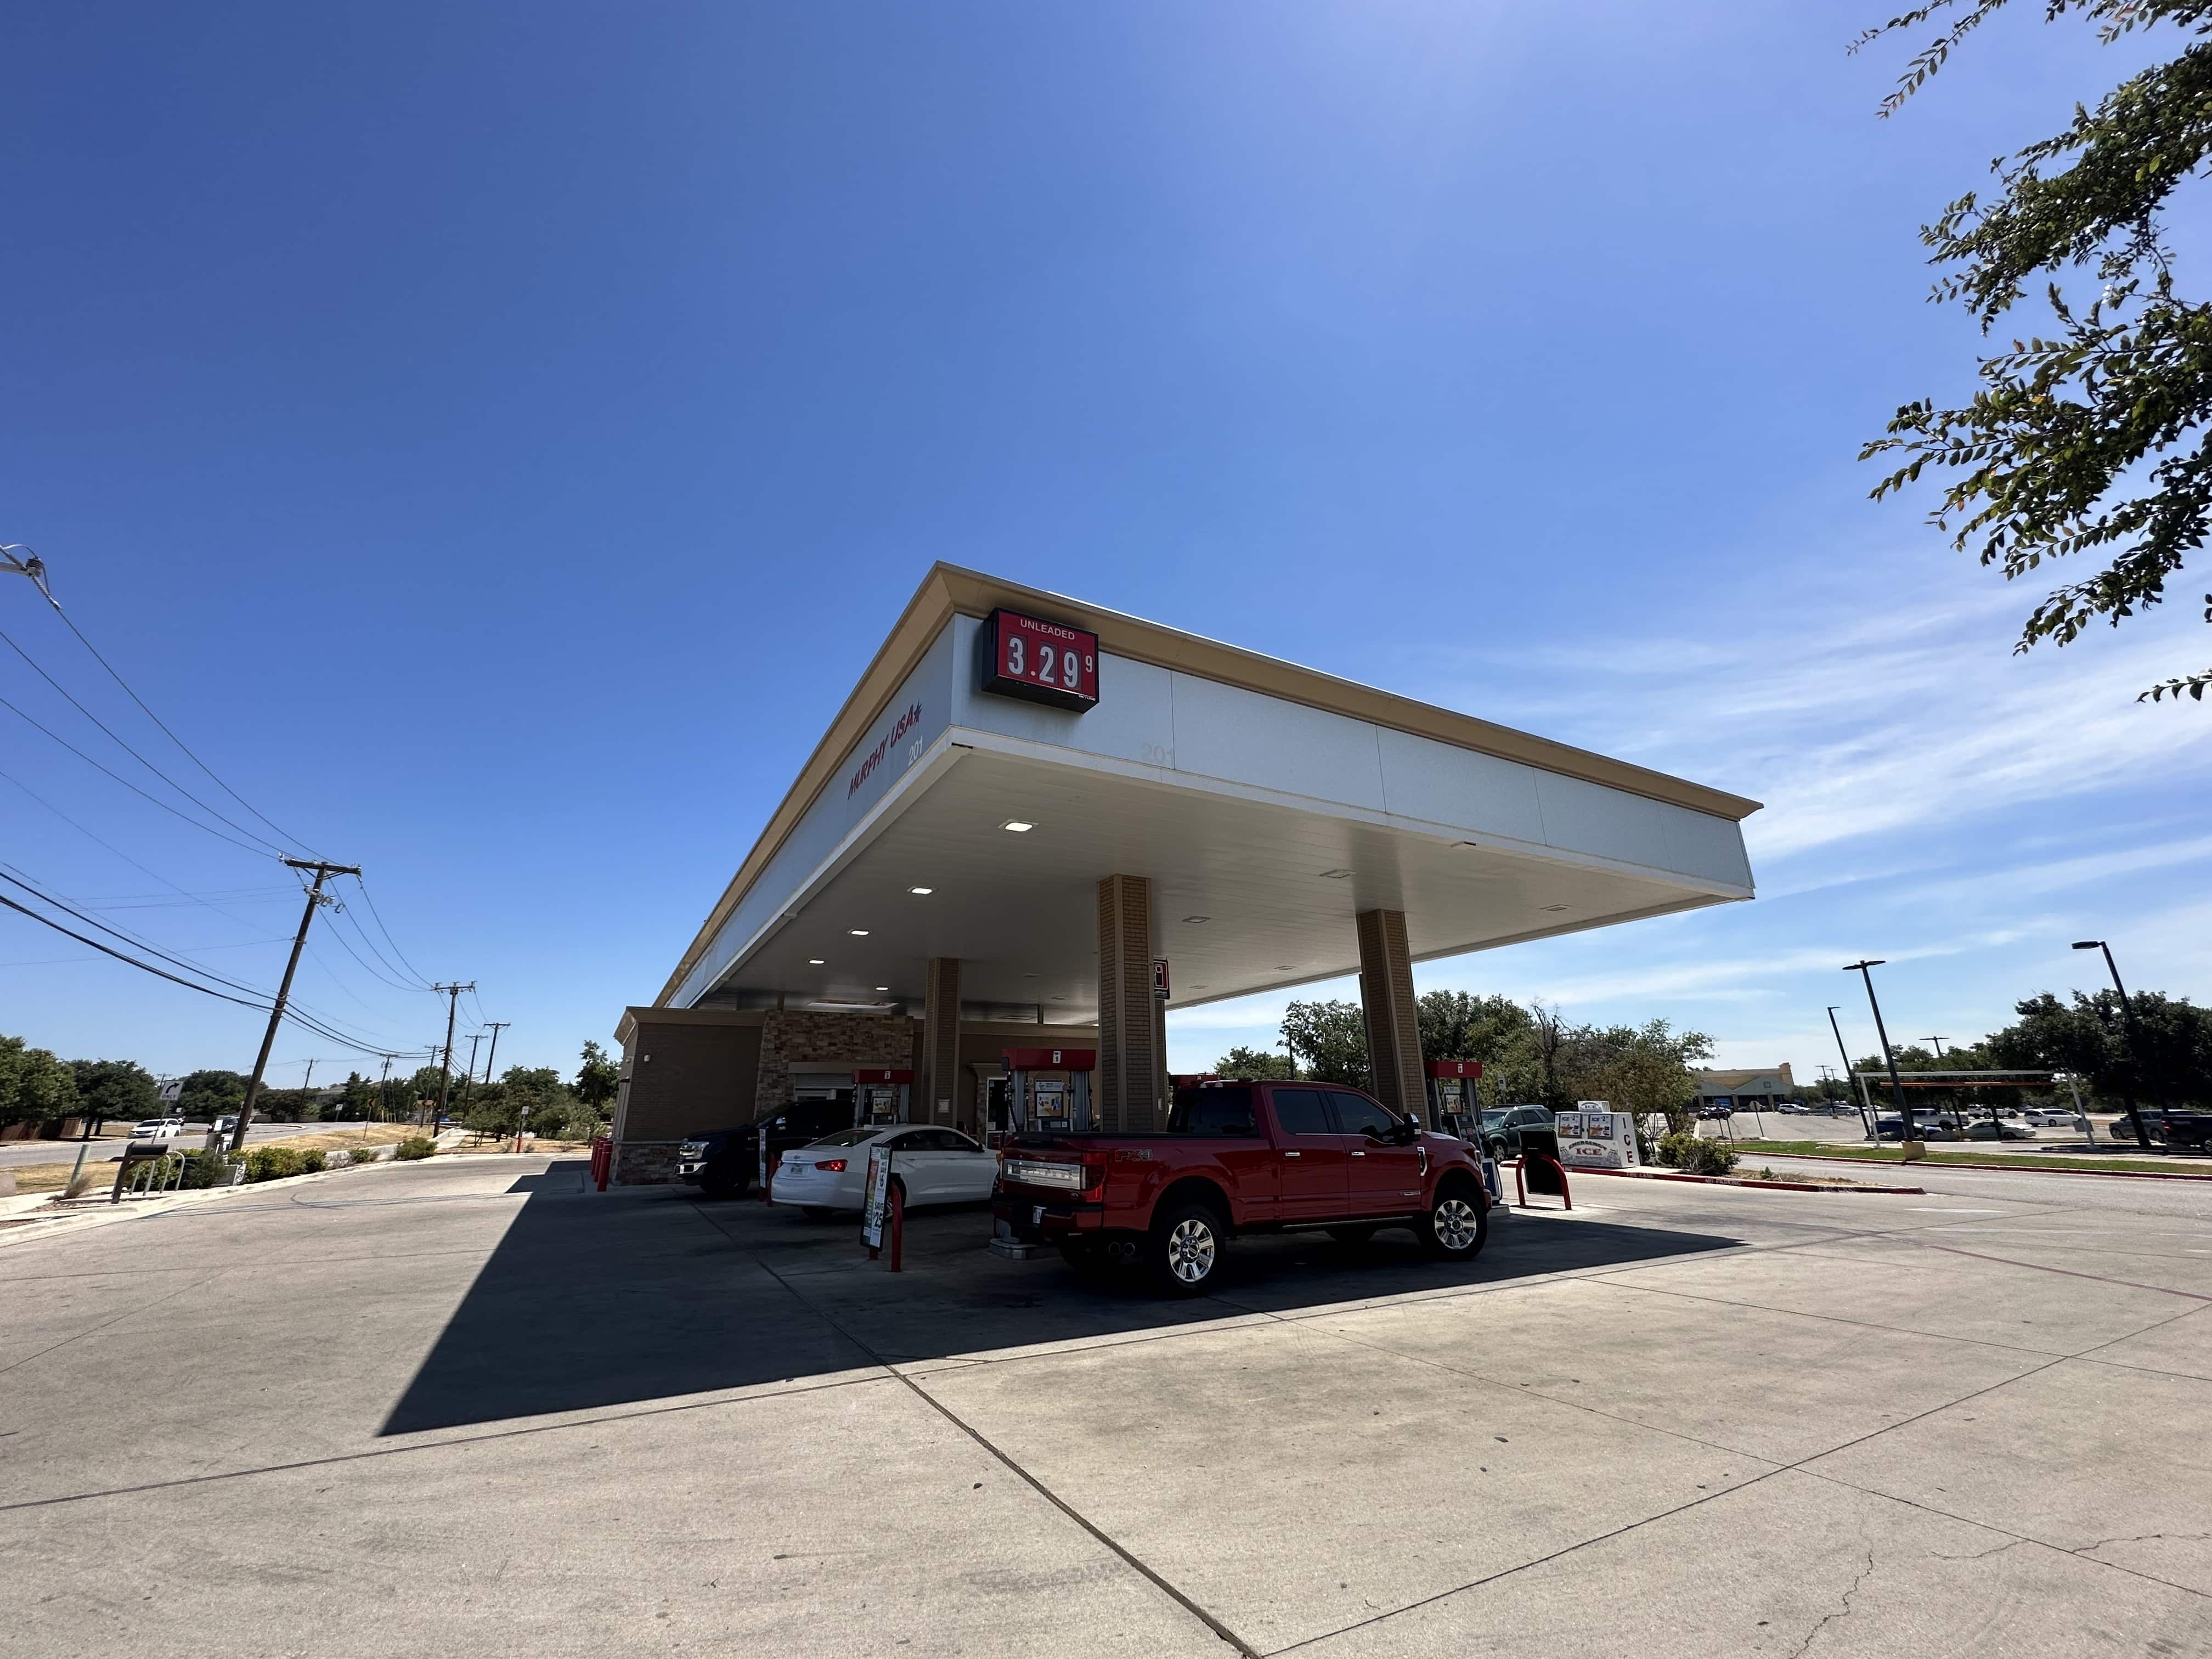 Murphy USA - Round Rock (TX 78664), US, gas station close to me